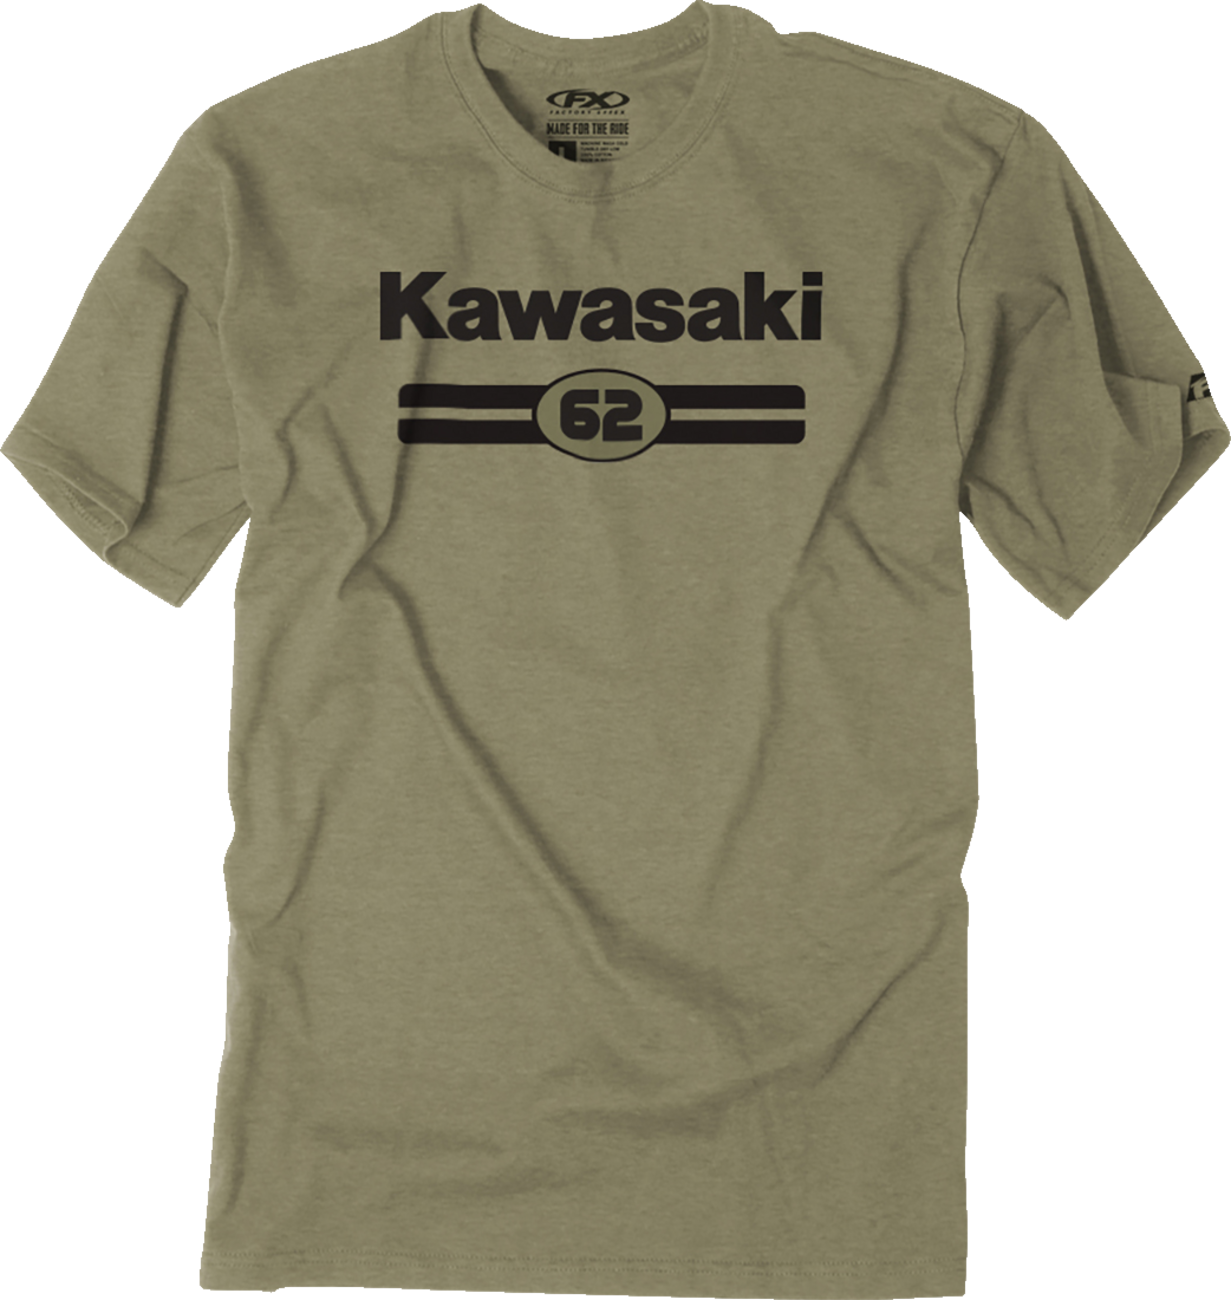 FACTORY EFFEX Kawasaki Sixty Two T-Shirt - Heather Olive - Medium 27-87122